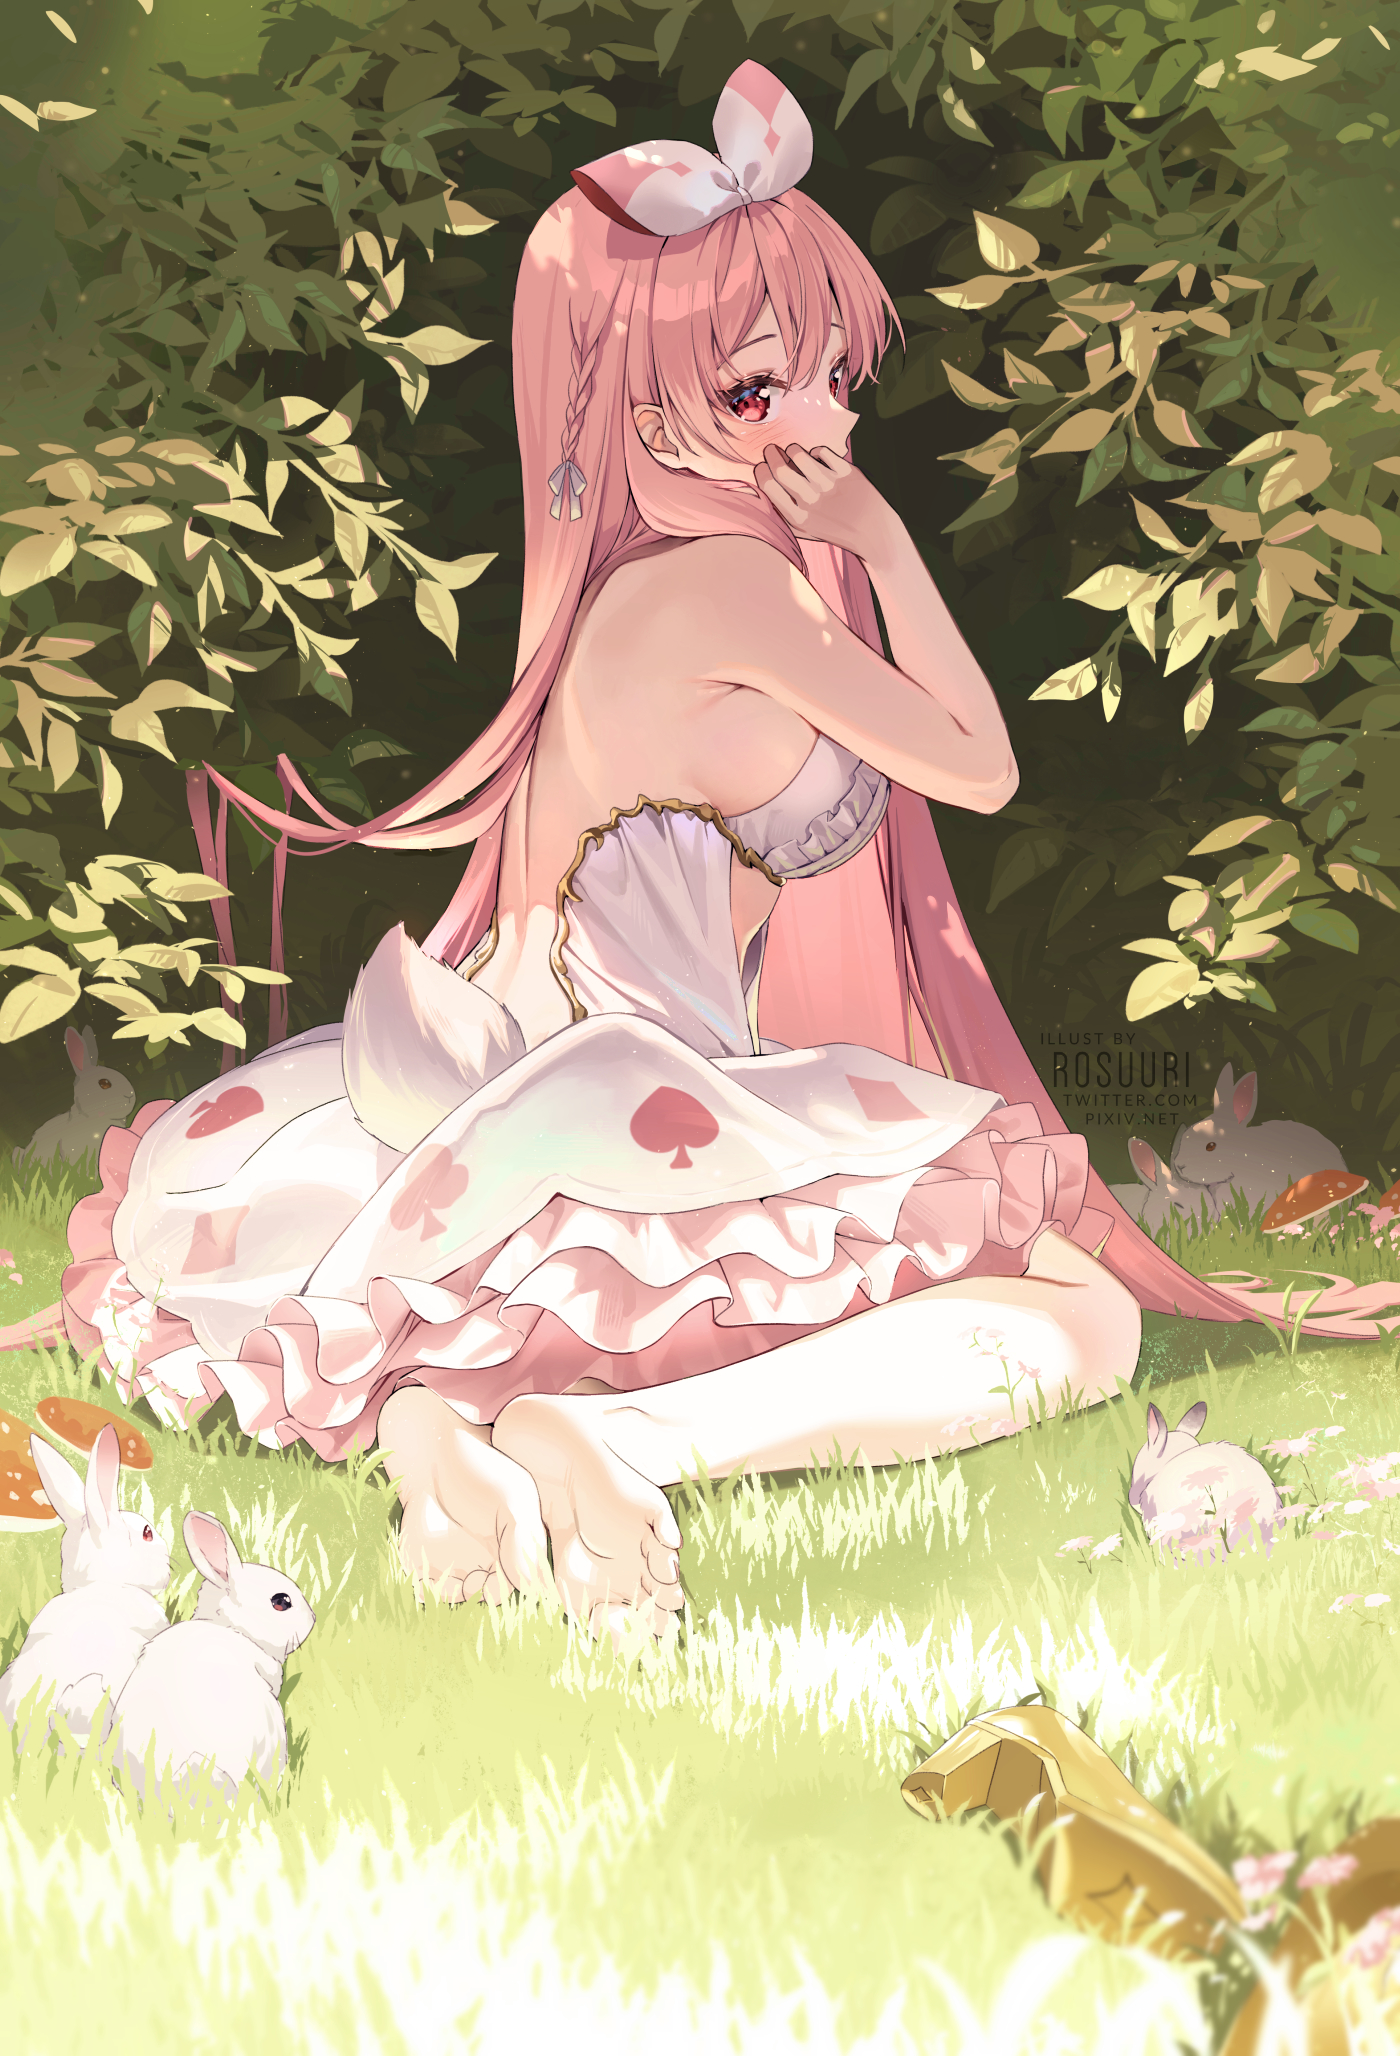 Anime 1400x2056 anime anime girls pink hair pink eyes rabbits tail bareback grass animals barefoot feet dress Alice in Wonderland Rosuuri artwork